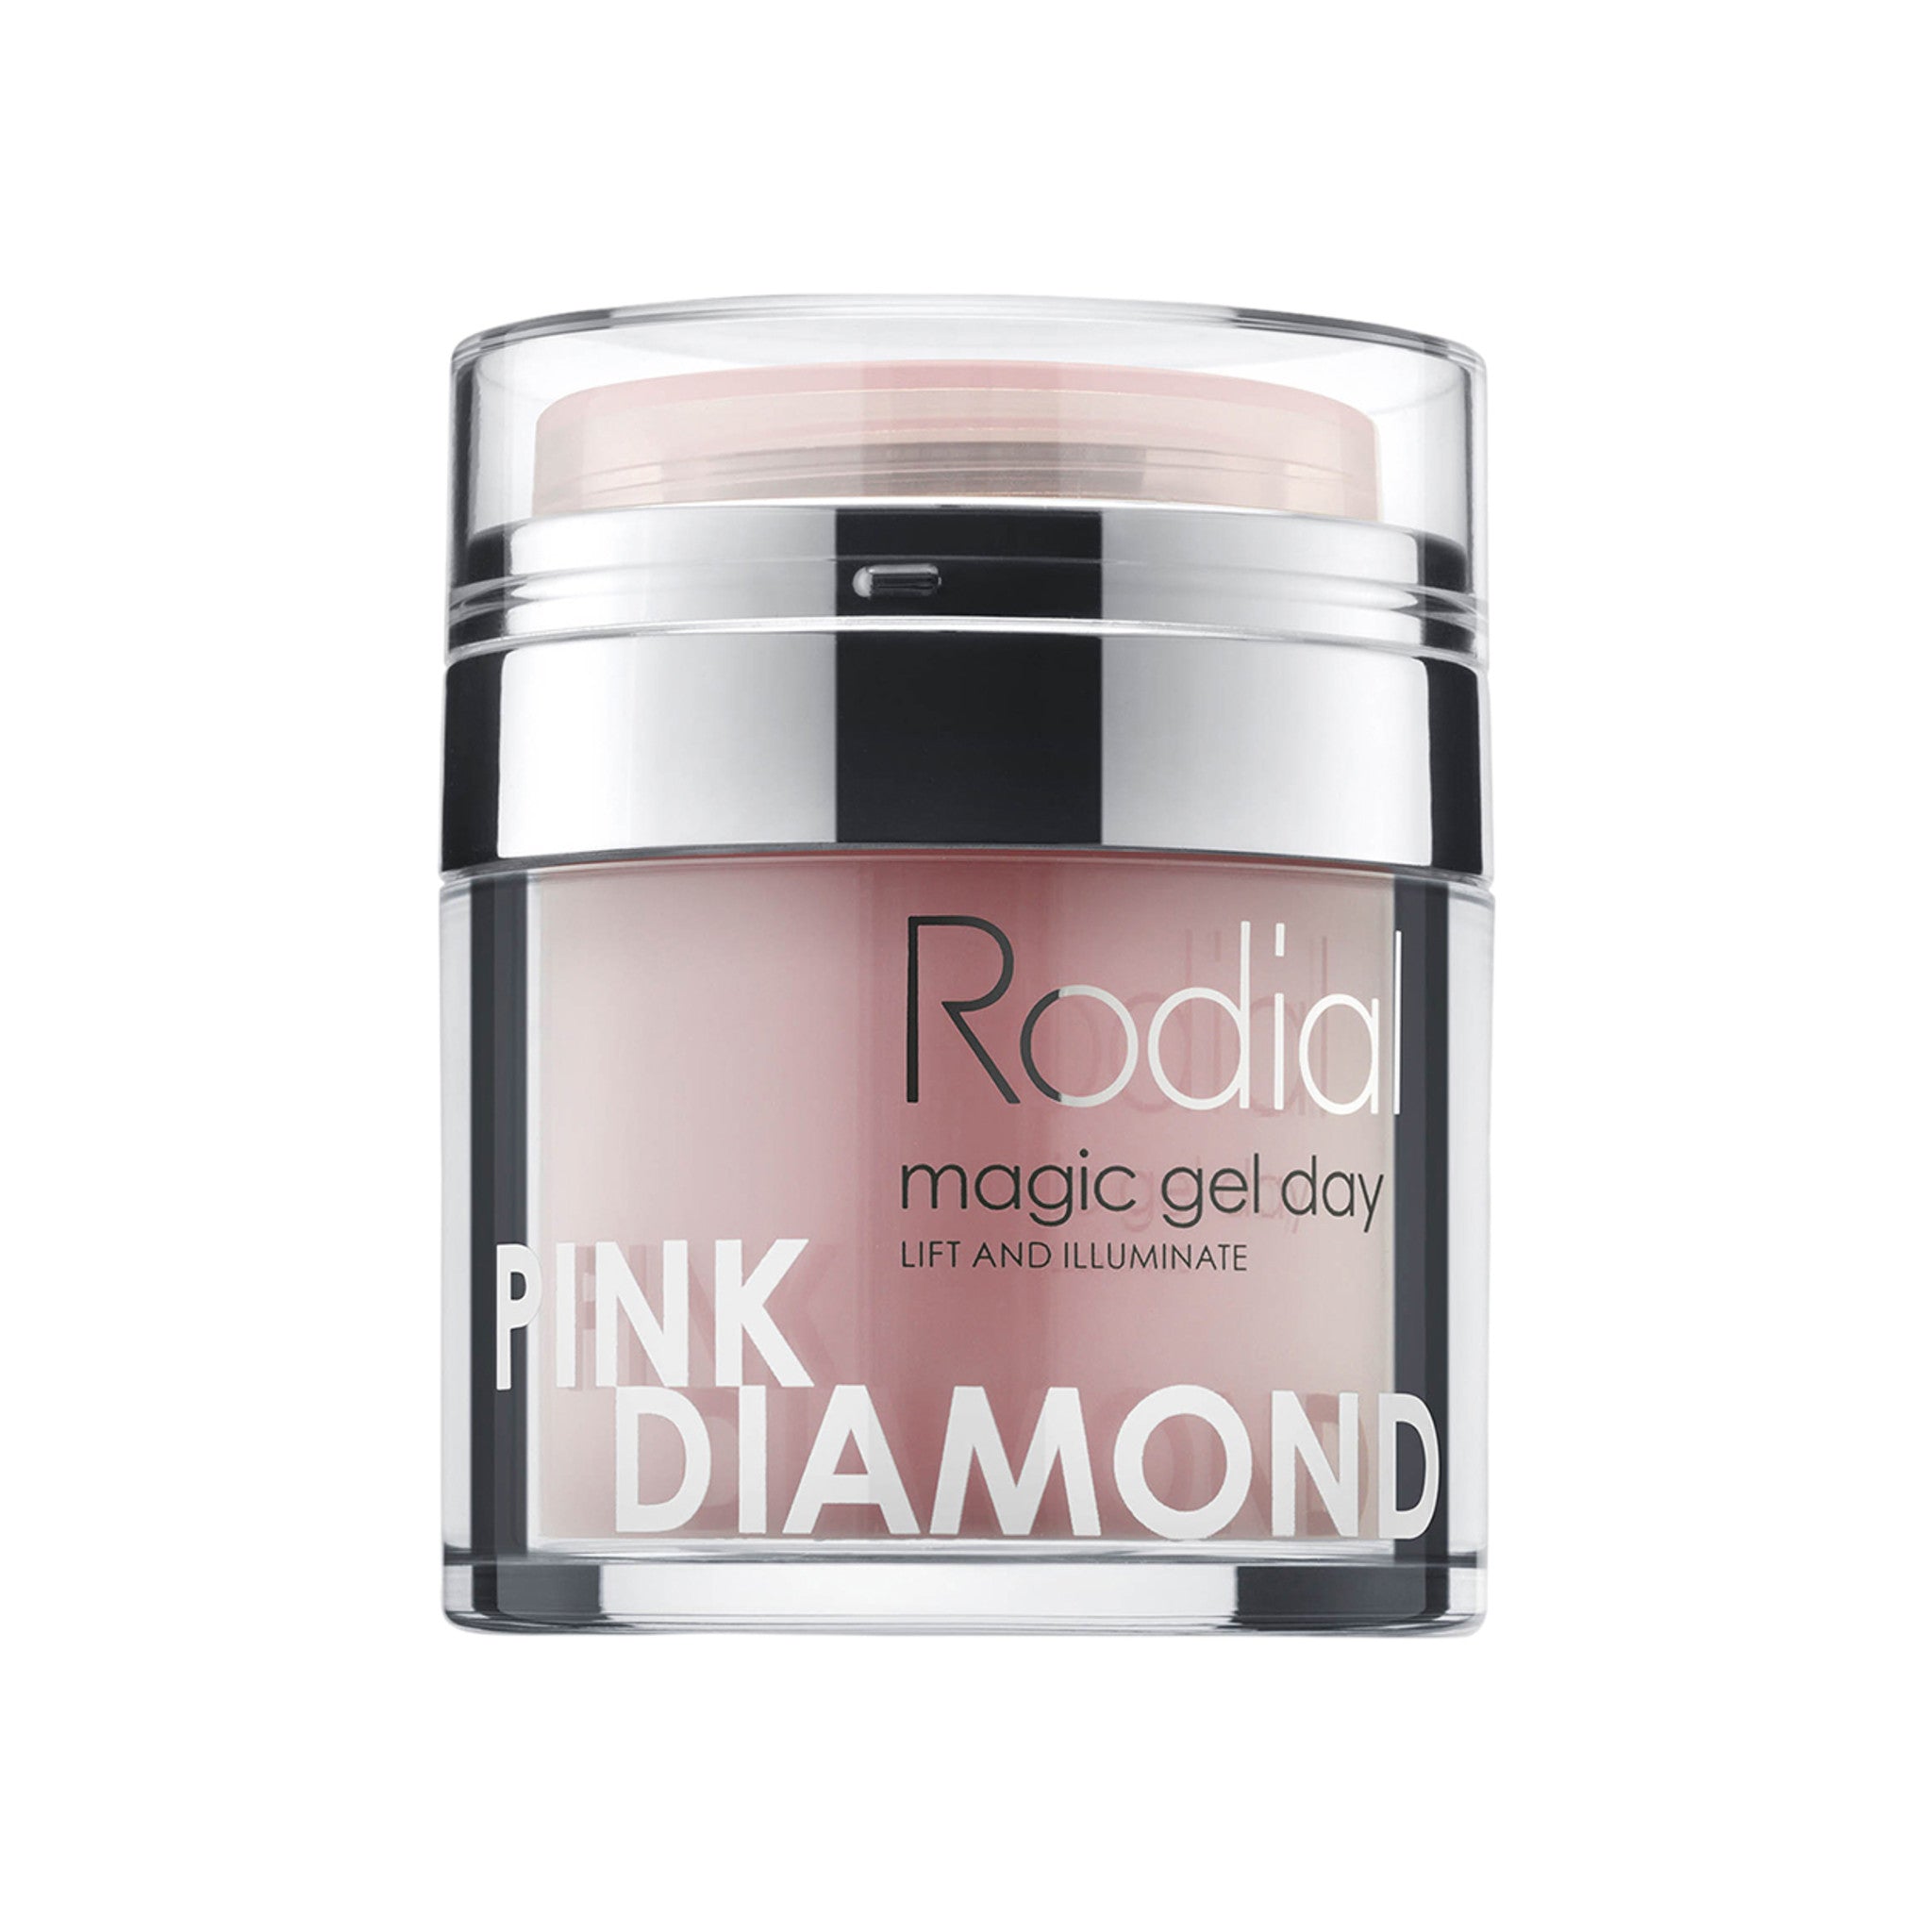 Rodial Pink Diamond Magic Gel main image.